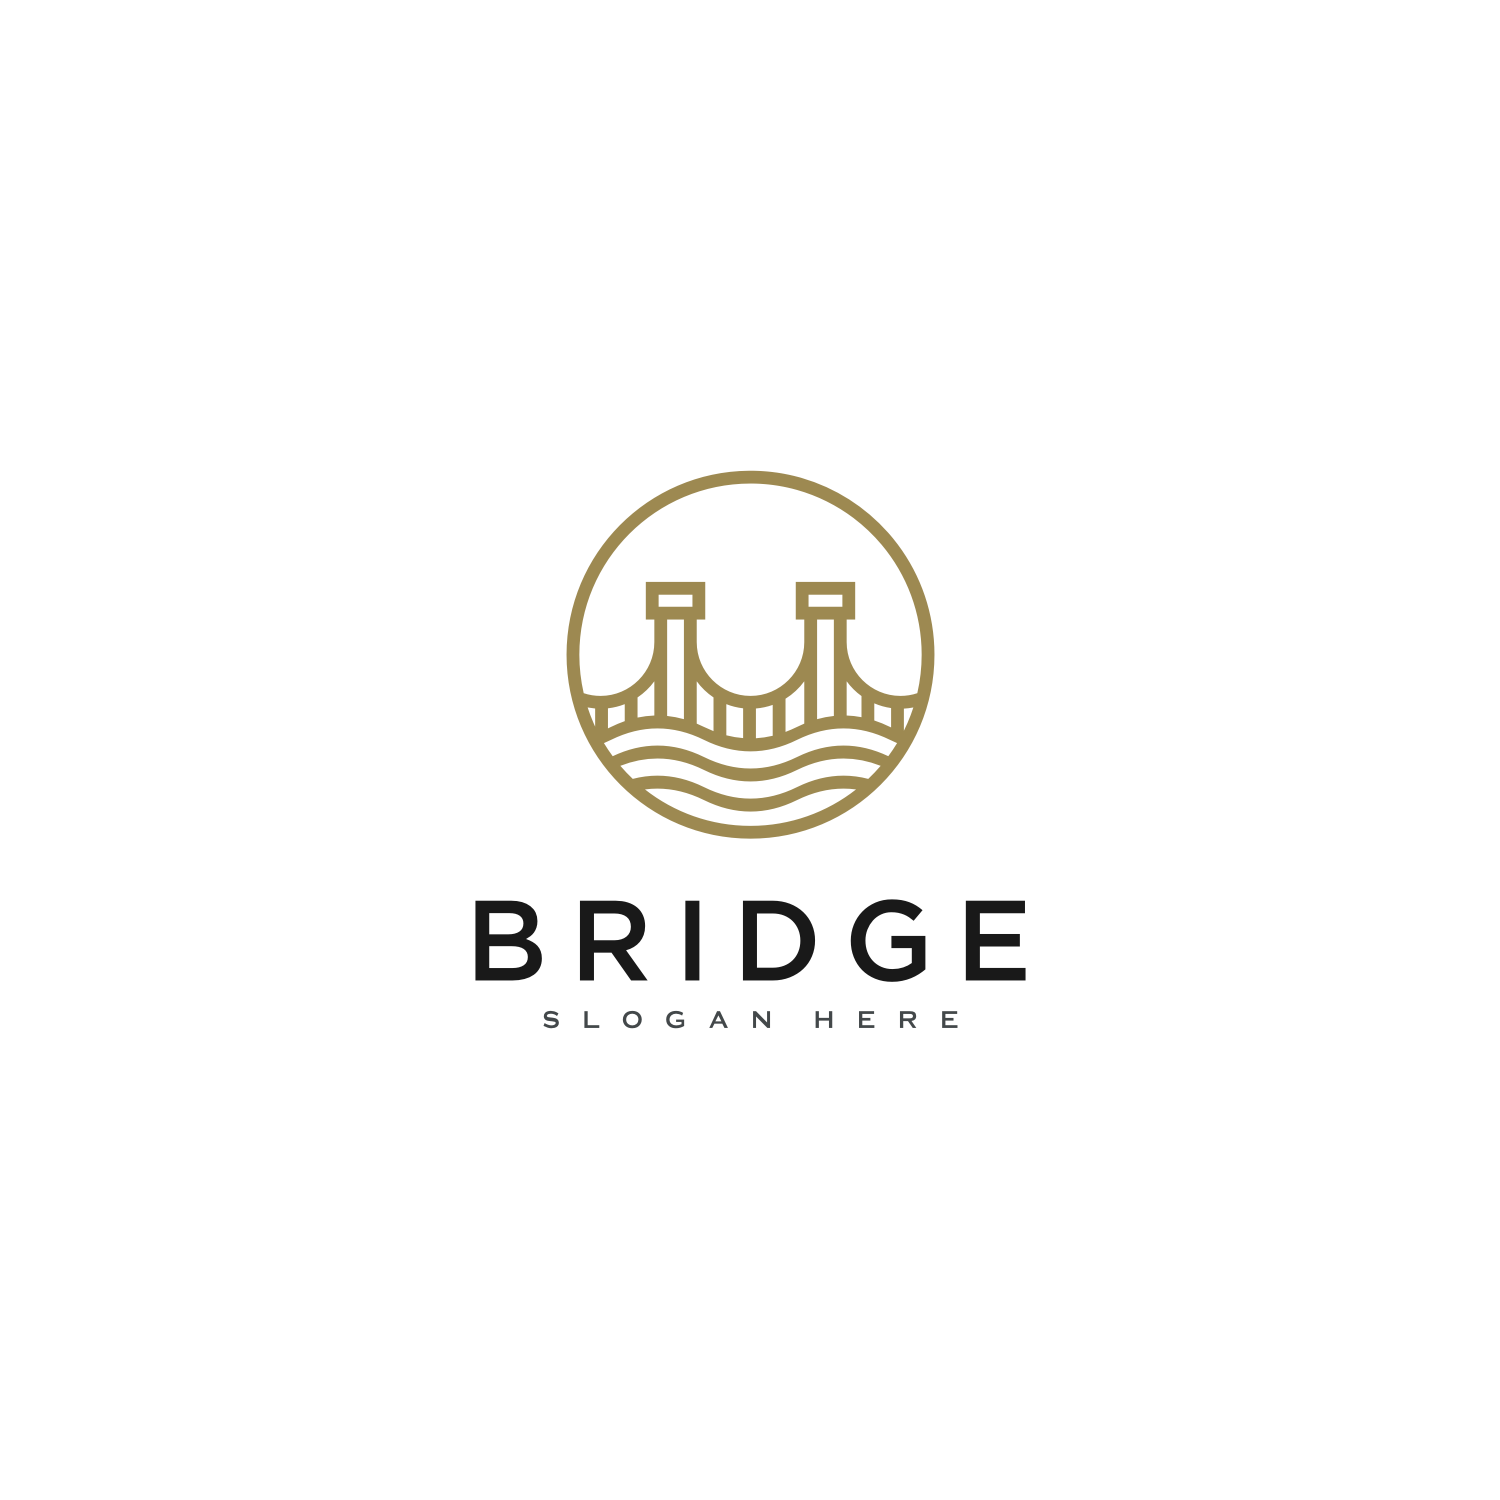 Set Of Bridge Architecture And Constructions Logo Design Preview Image.